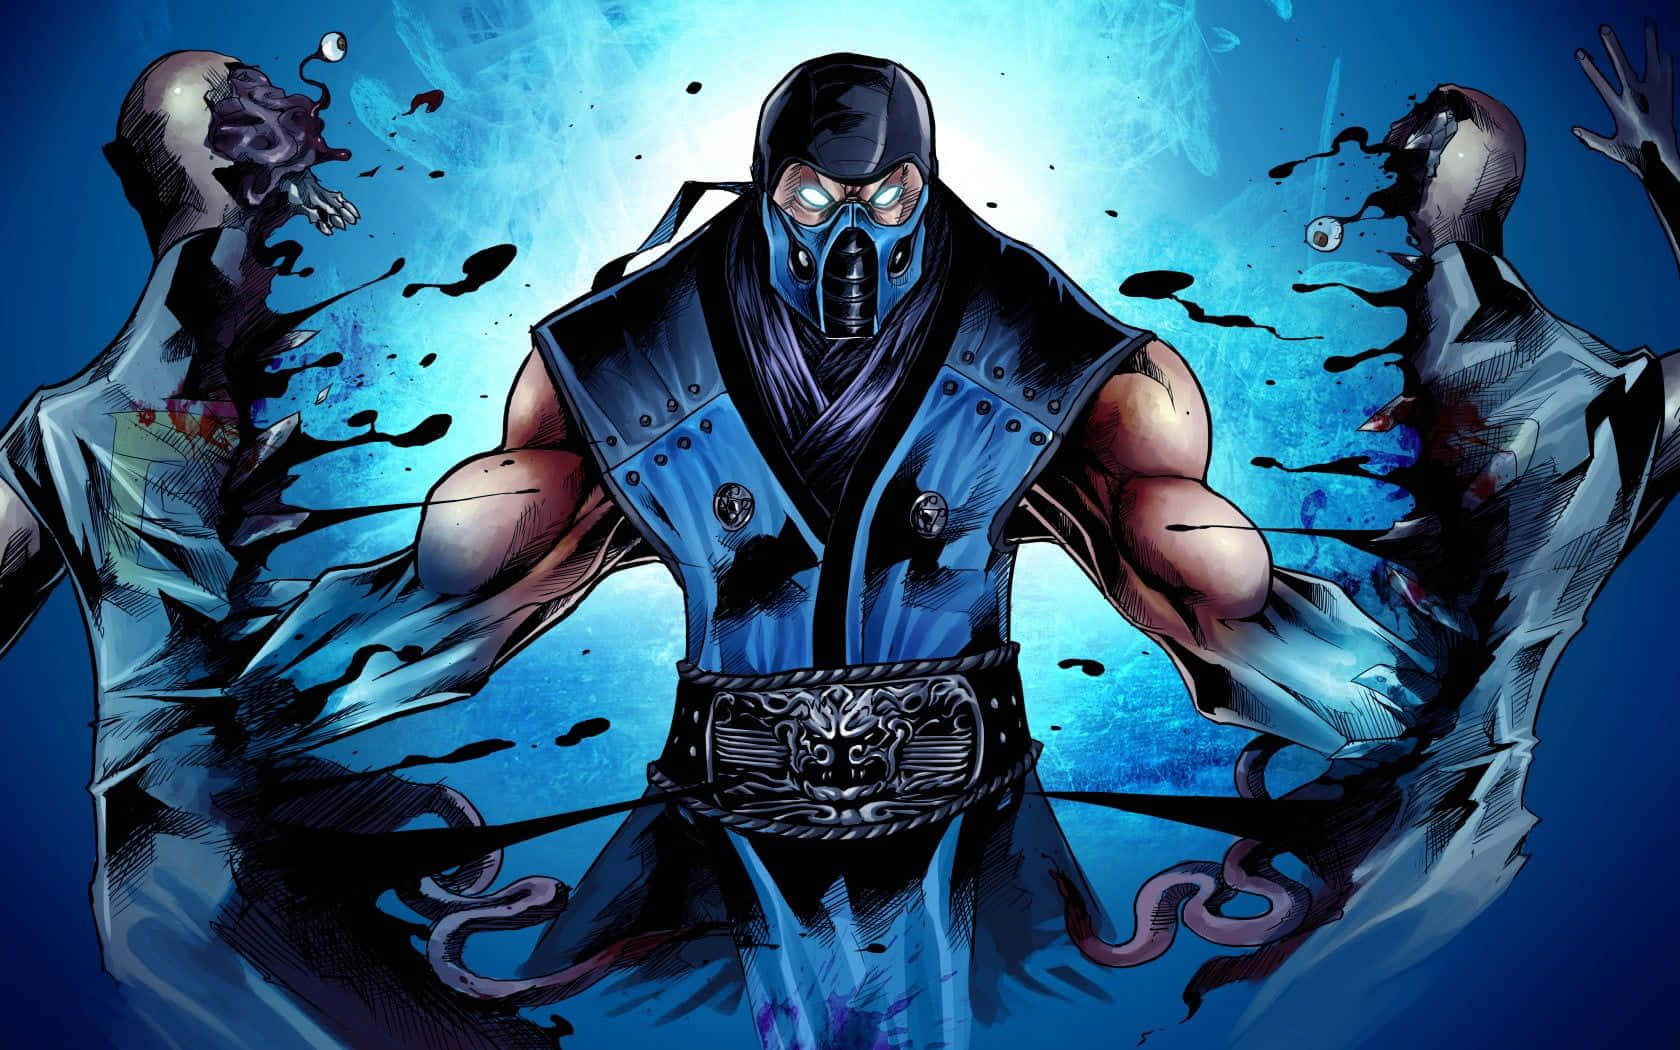 Sub-Zero unleashes his icy powers in Mortal Kombat Wallpaper